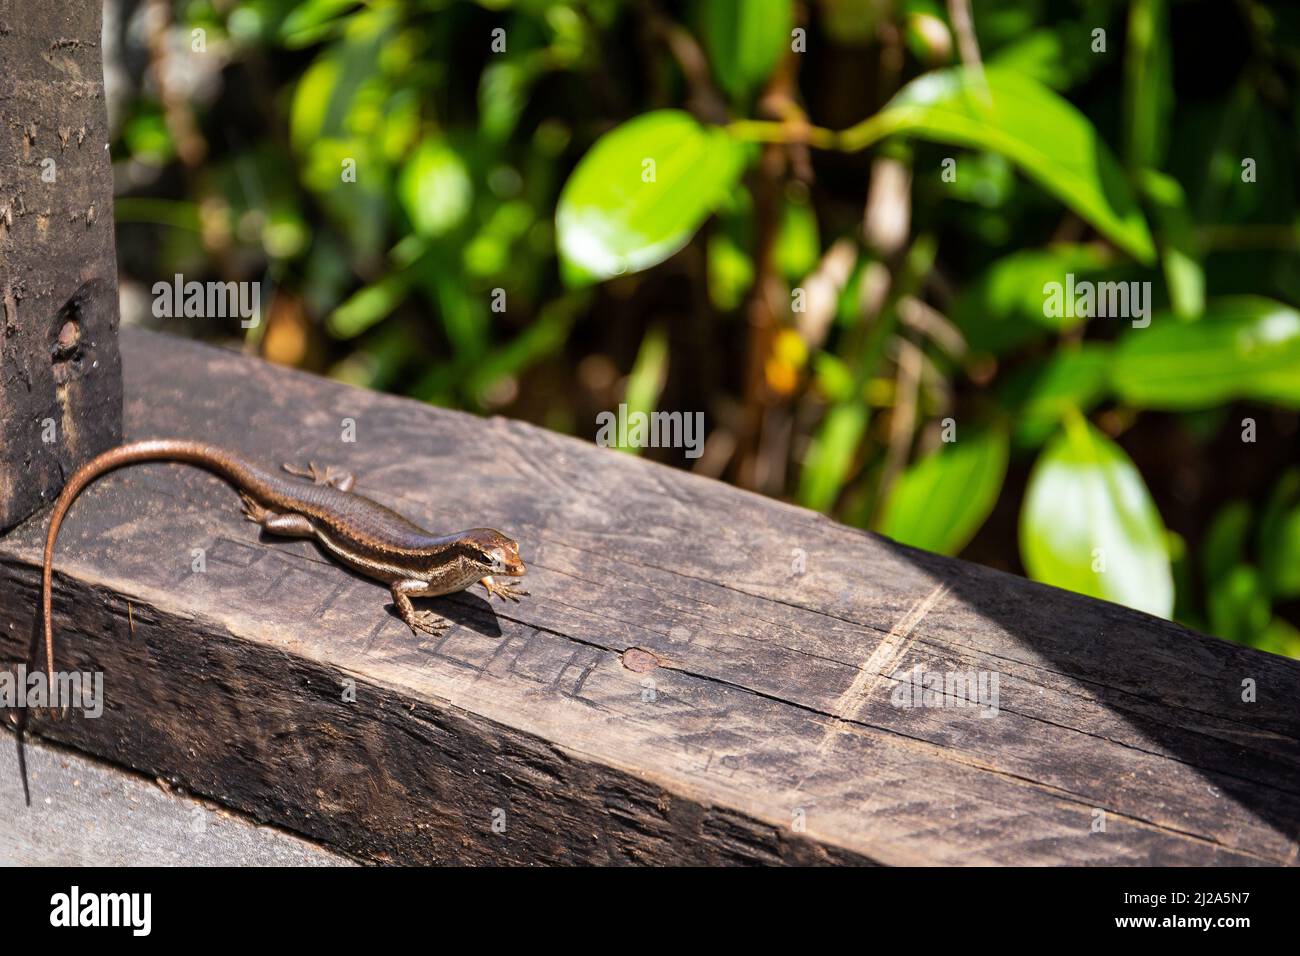 Seychelles skink lizard (Mabuya seychellensis, Trachylepis seychellensis) on a wooden platform, close-up view, Mahe, Seychelles. Stock Photo